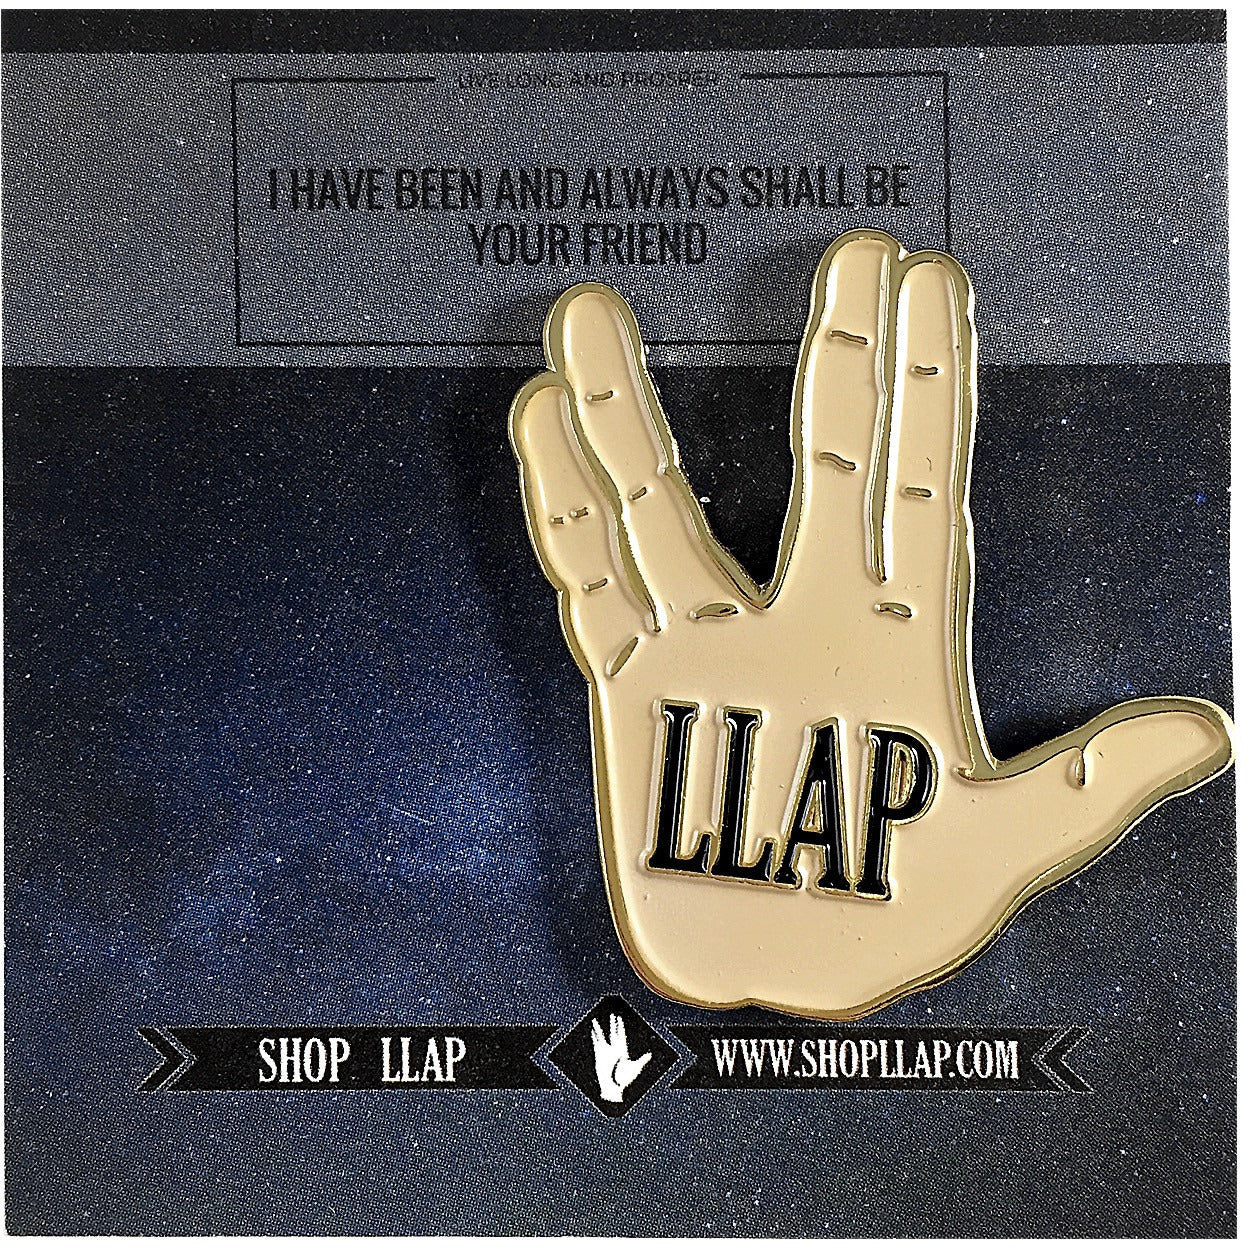 LLAP Enamel Pin With Vulcan Hand Salute - Leonard Nimoy's Shop LLAP